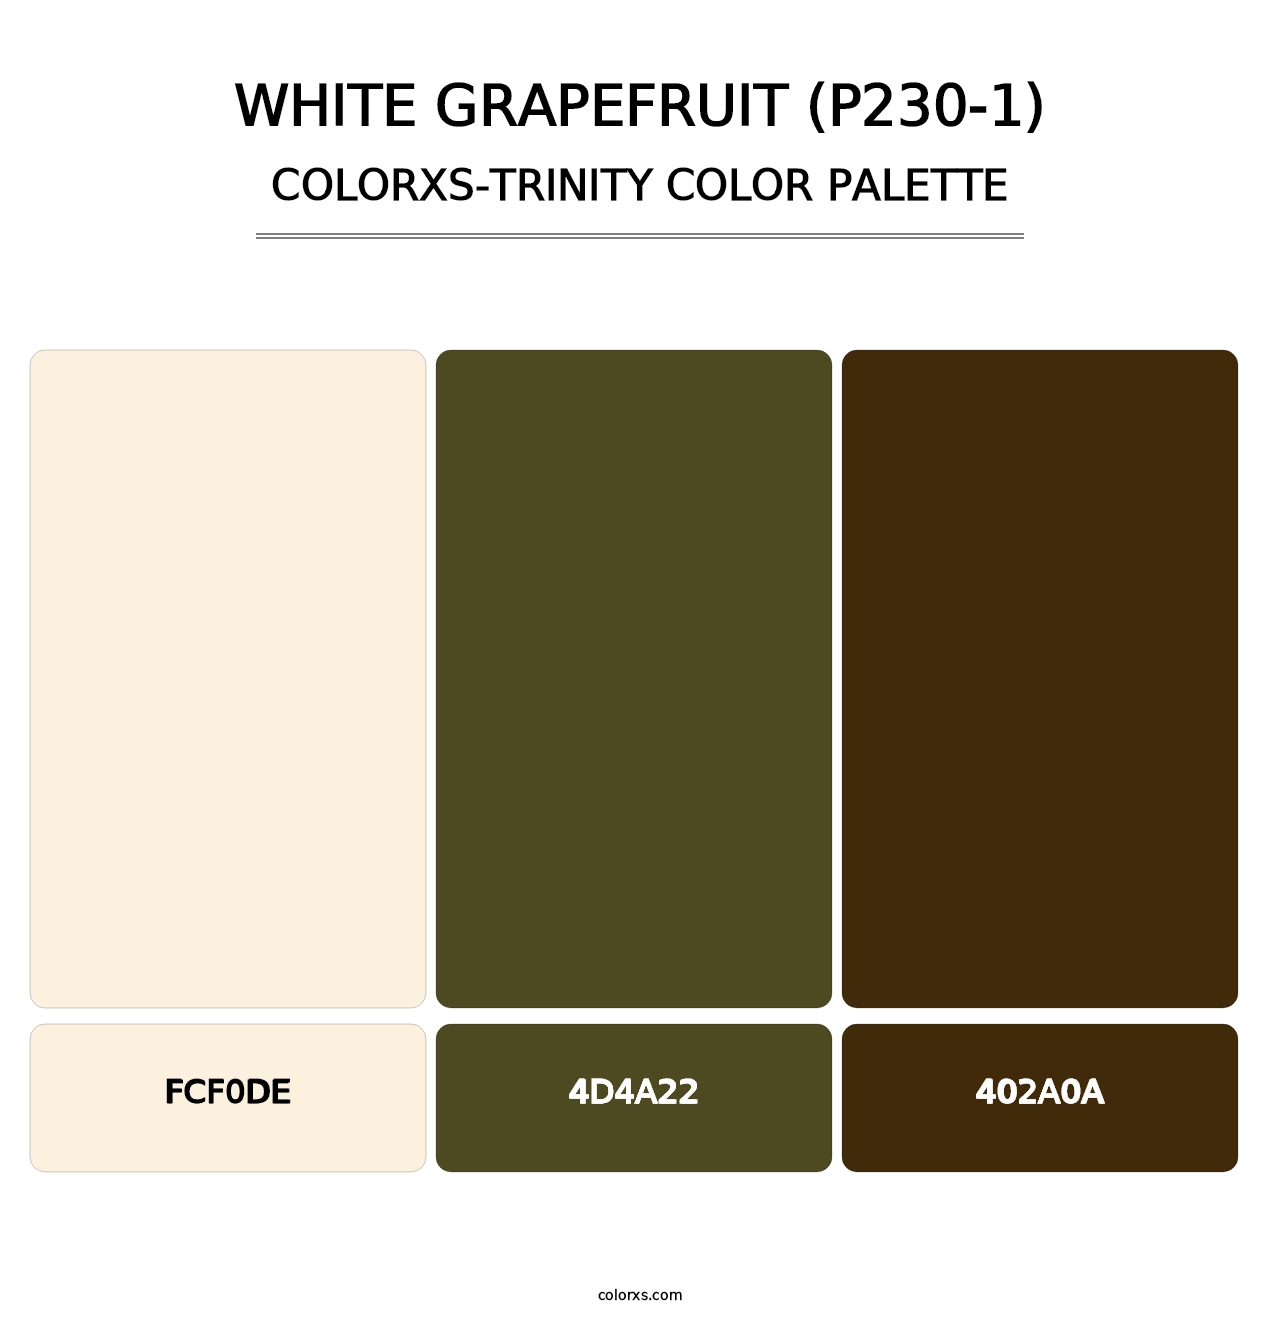 White Grapefruit (P230-1) - Colorxs Trinity Palette